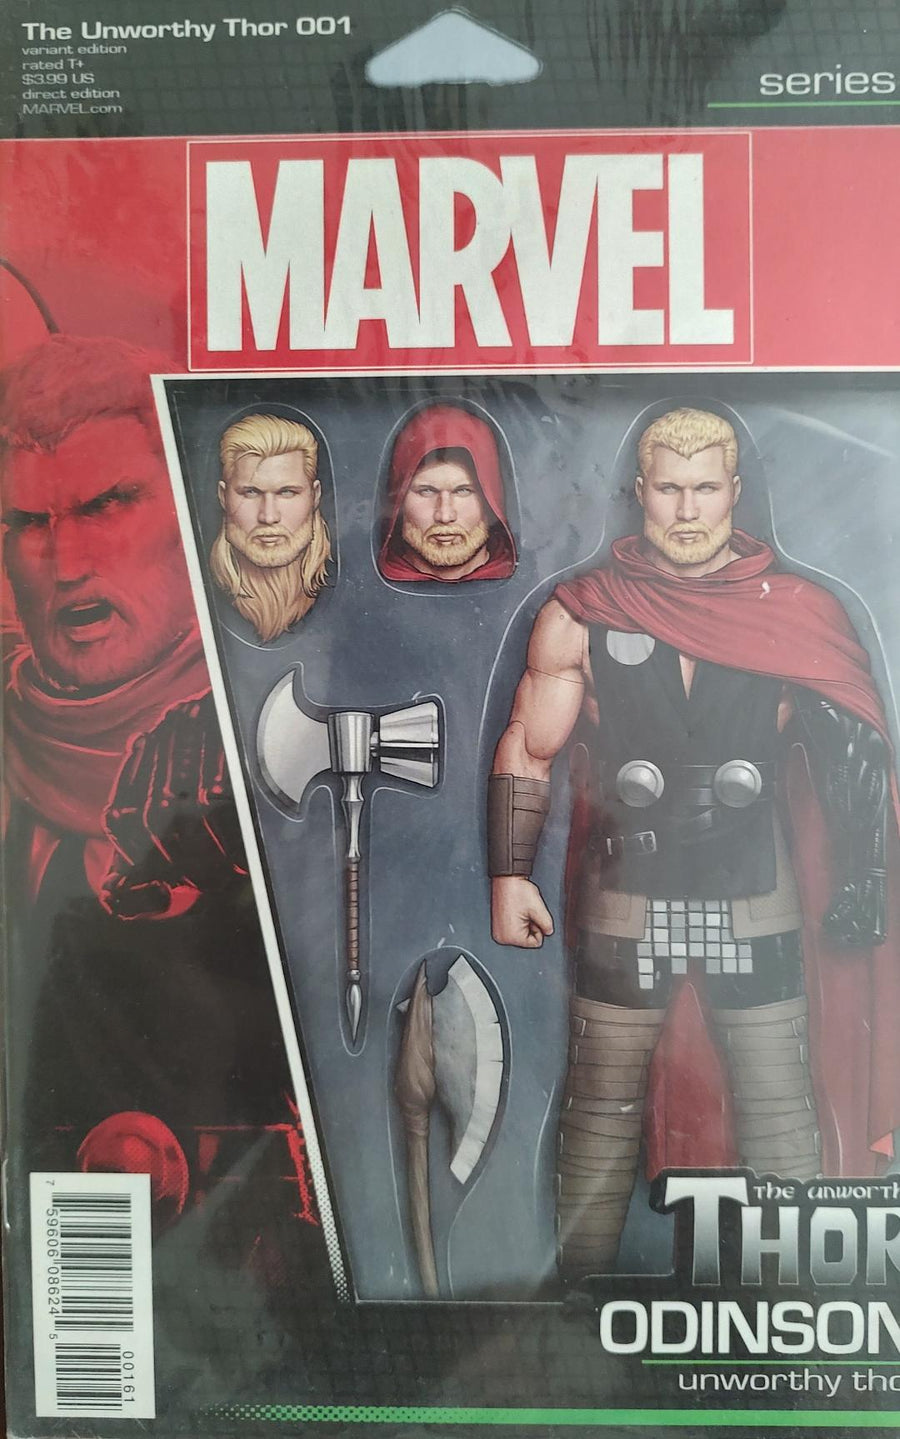 The Unworthy Thor #001 Comic Book